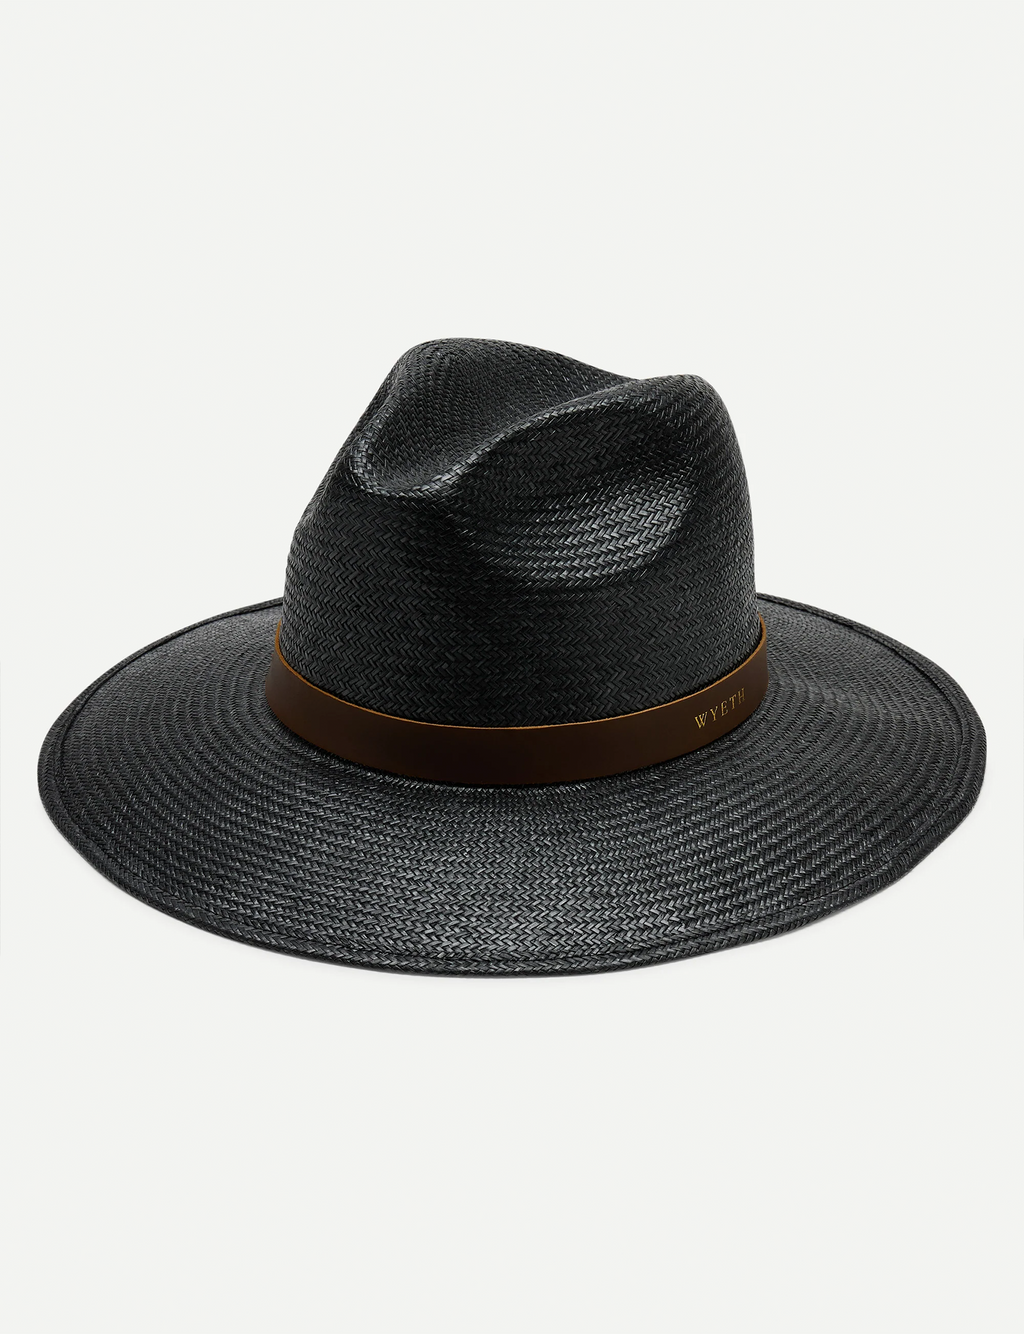 Miguel Panama Hat, Black